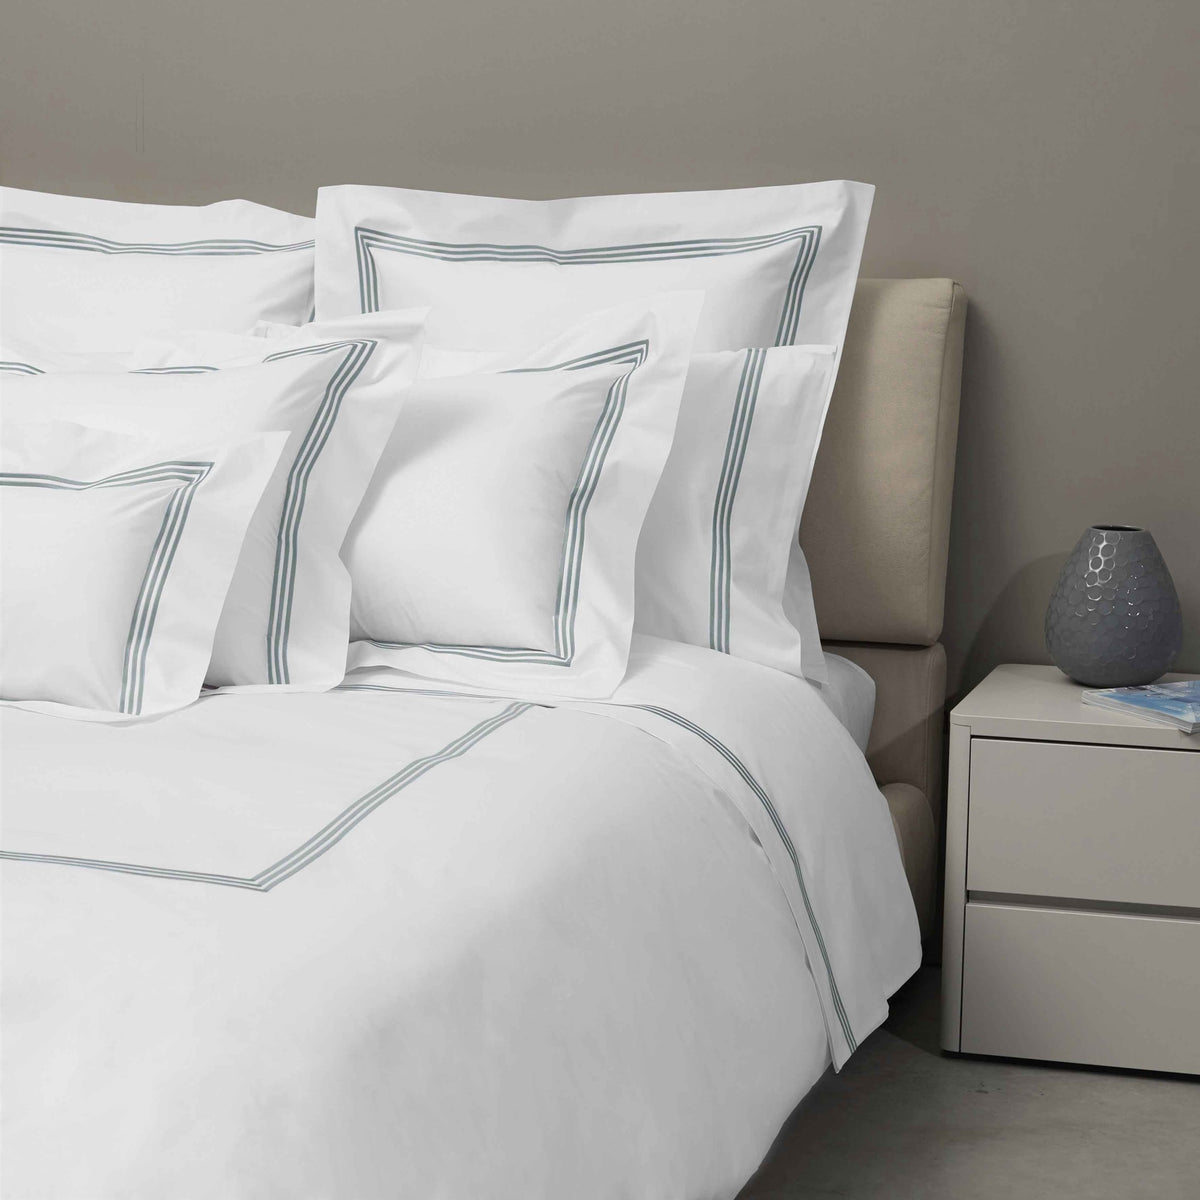 Bed Dressed in Signoria Platinum Percale Bedding in White/Wilton Blue Color